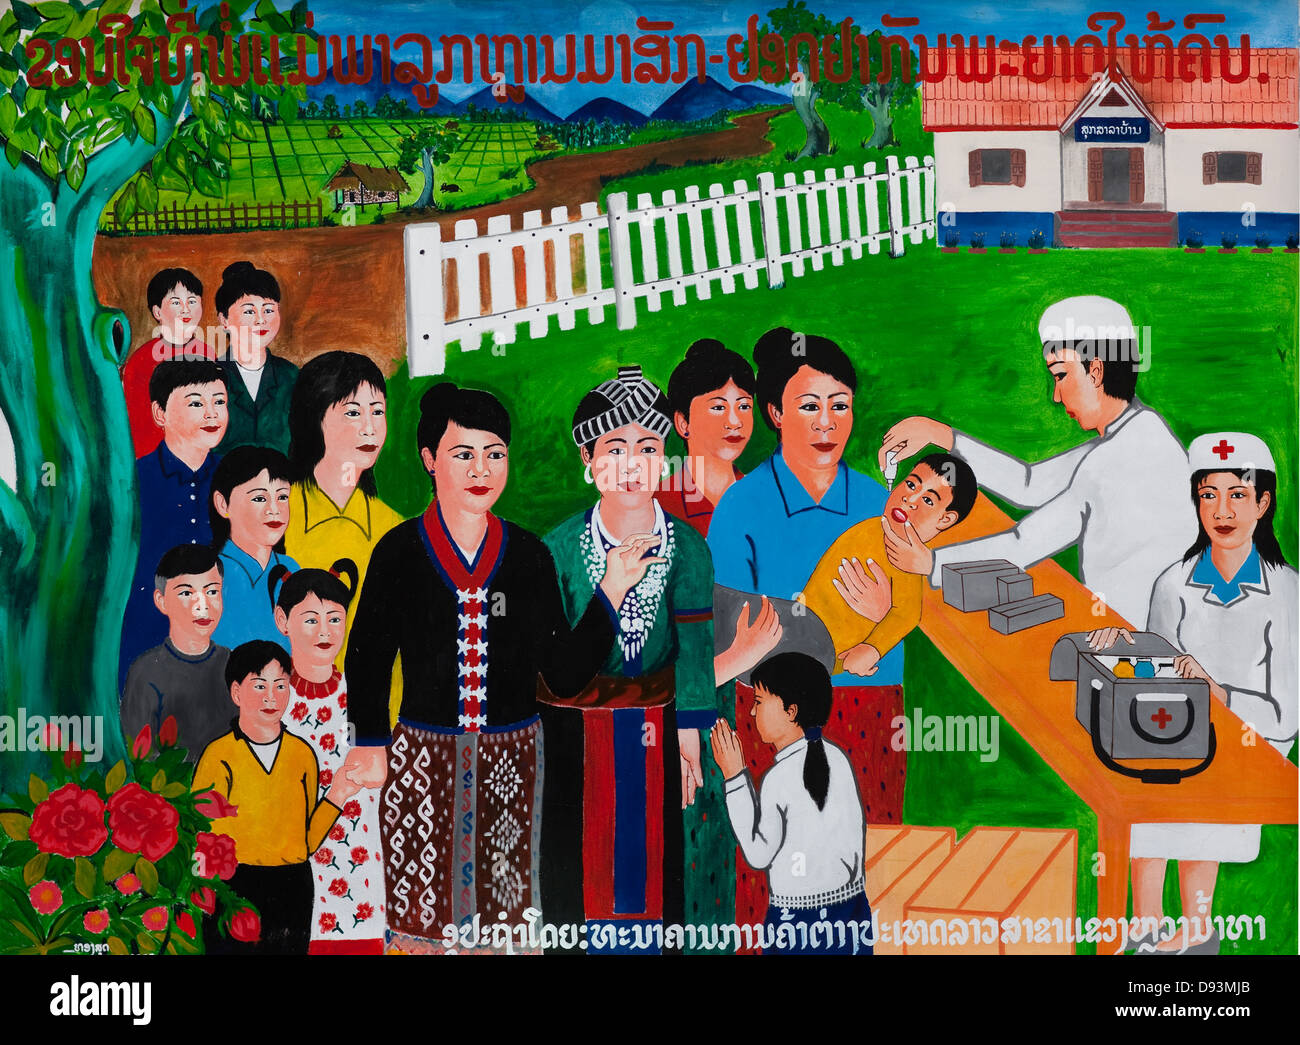 Cartel propagandístico de salud, Louang Namtha, Laos Foto de stock